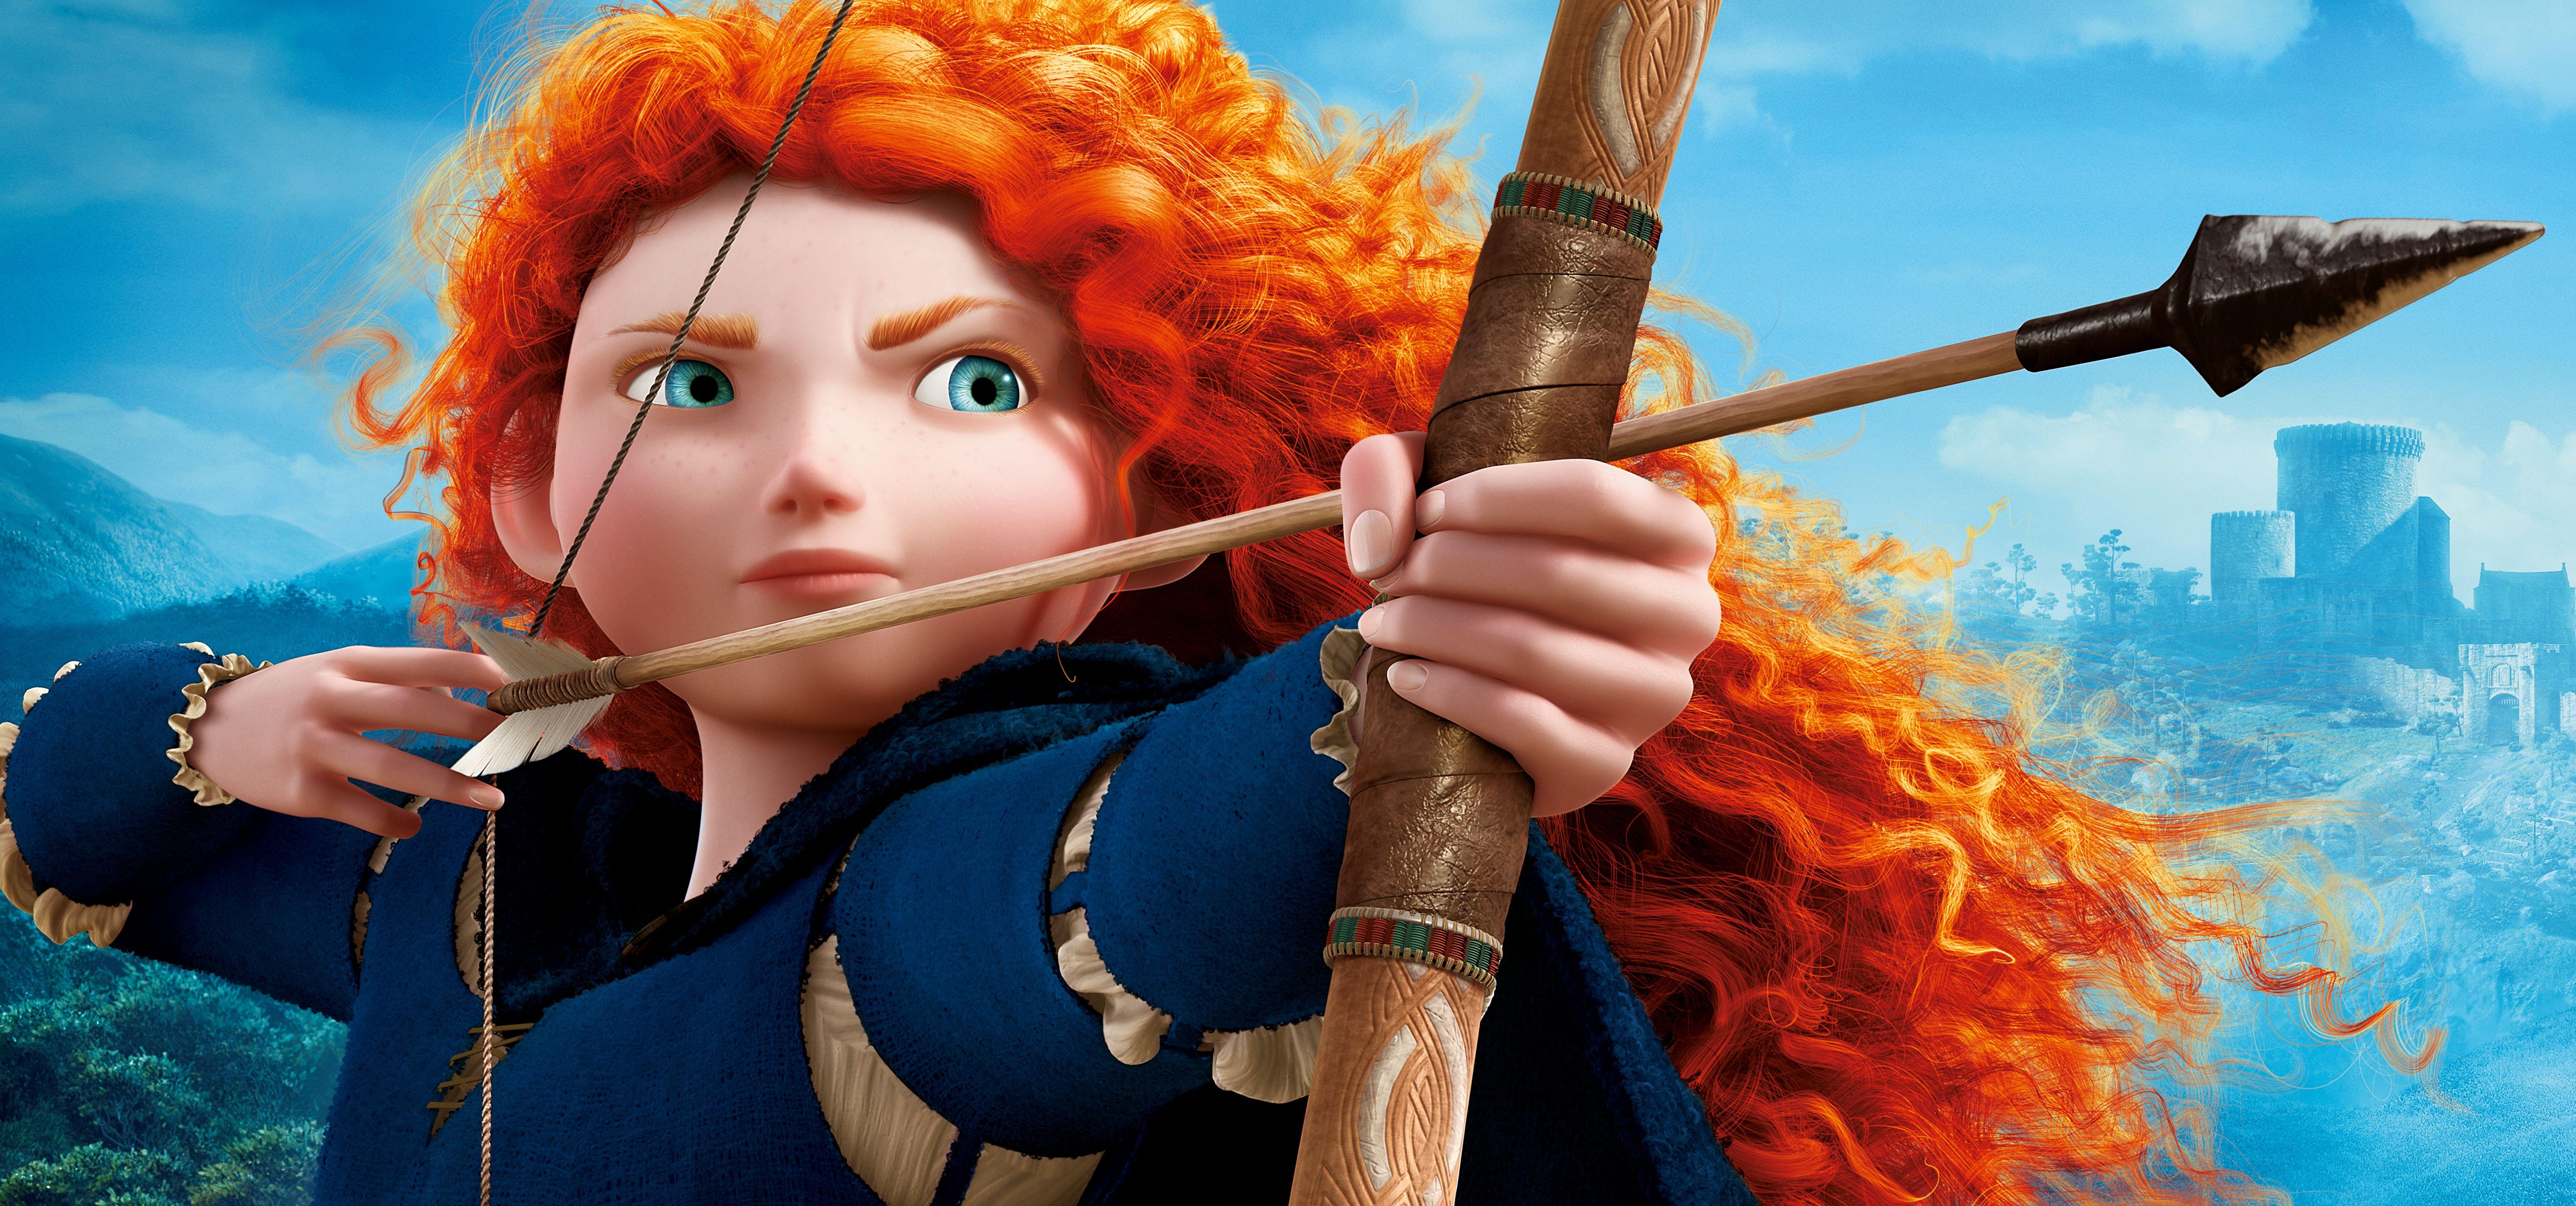 Wallpaper Princess Merida, Brave, Animation, Disney Princess, 4K